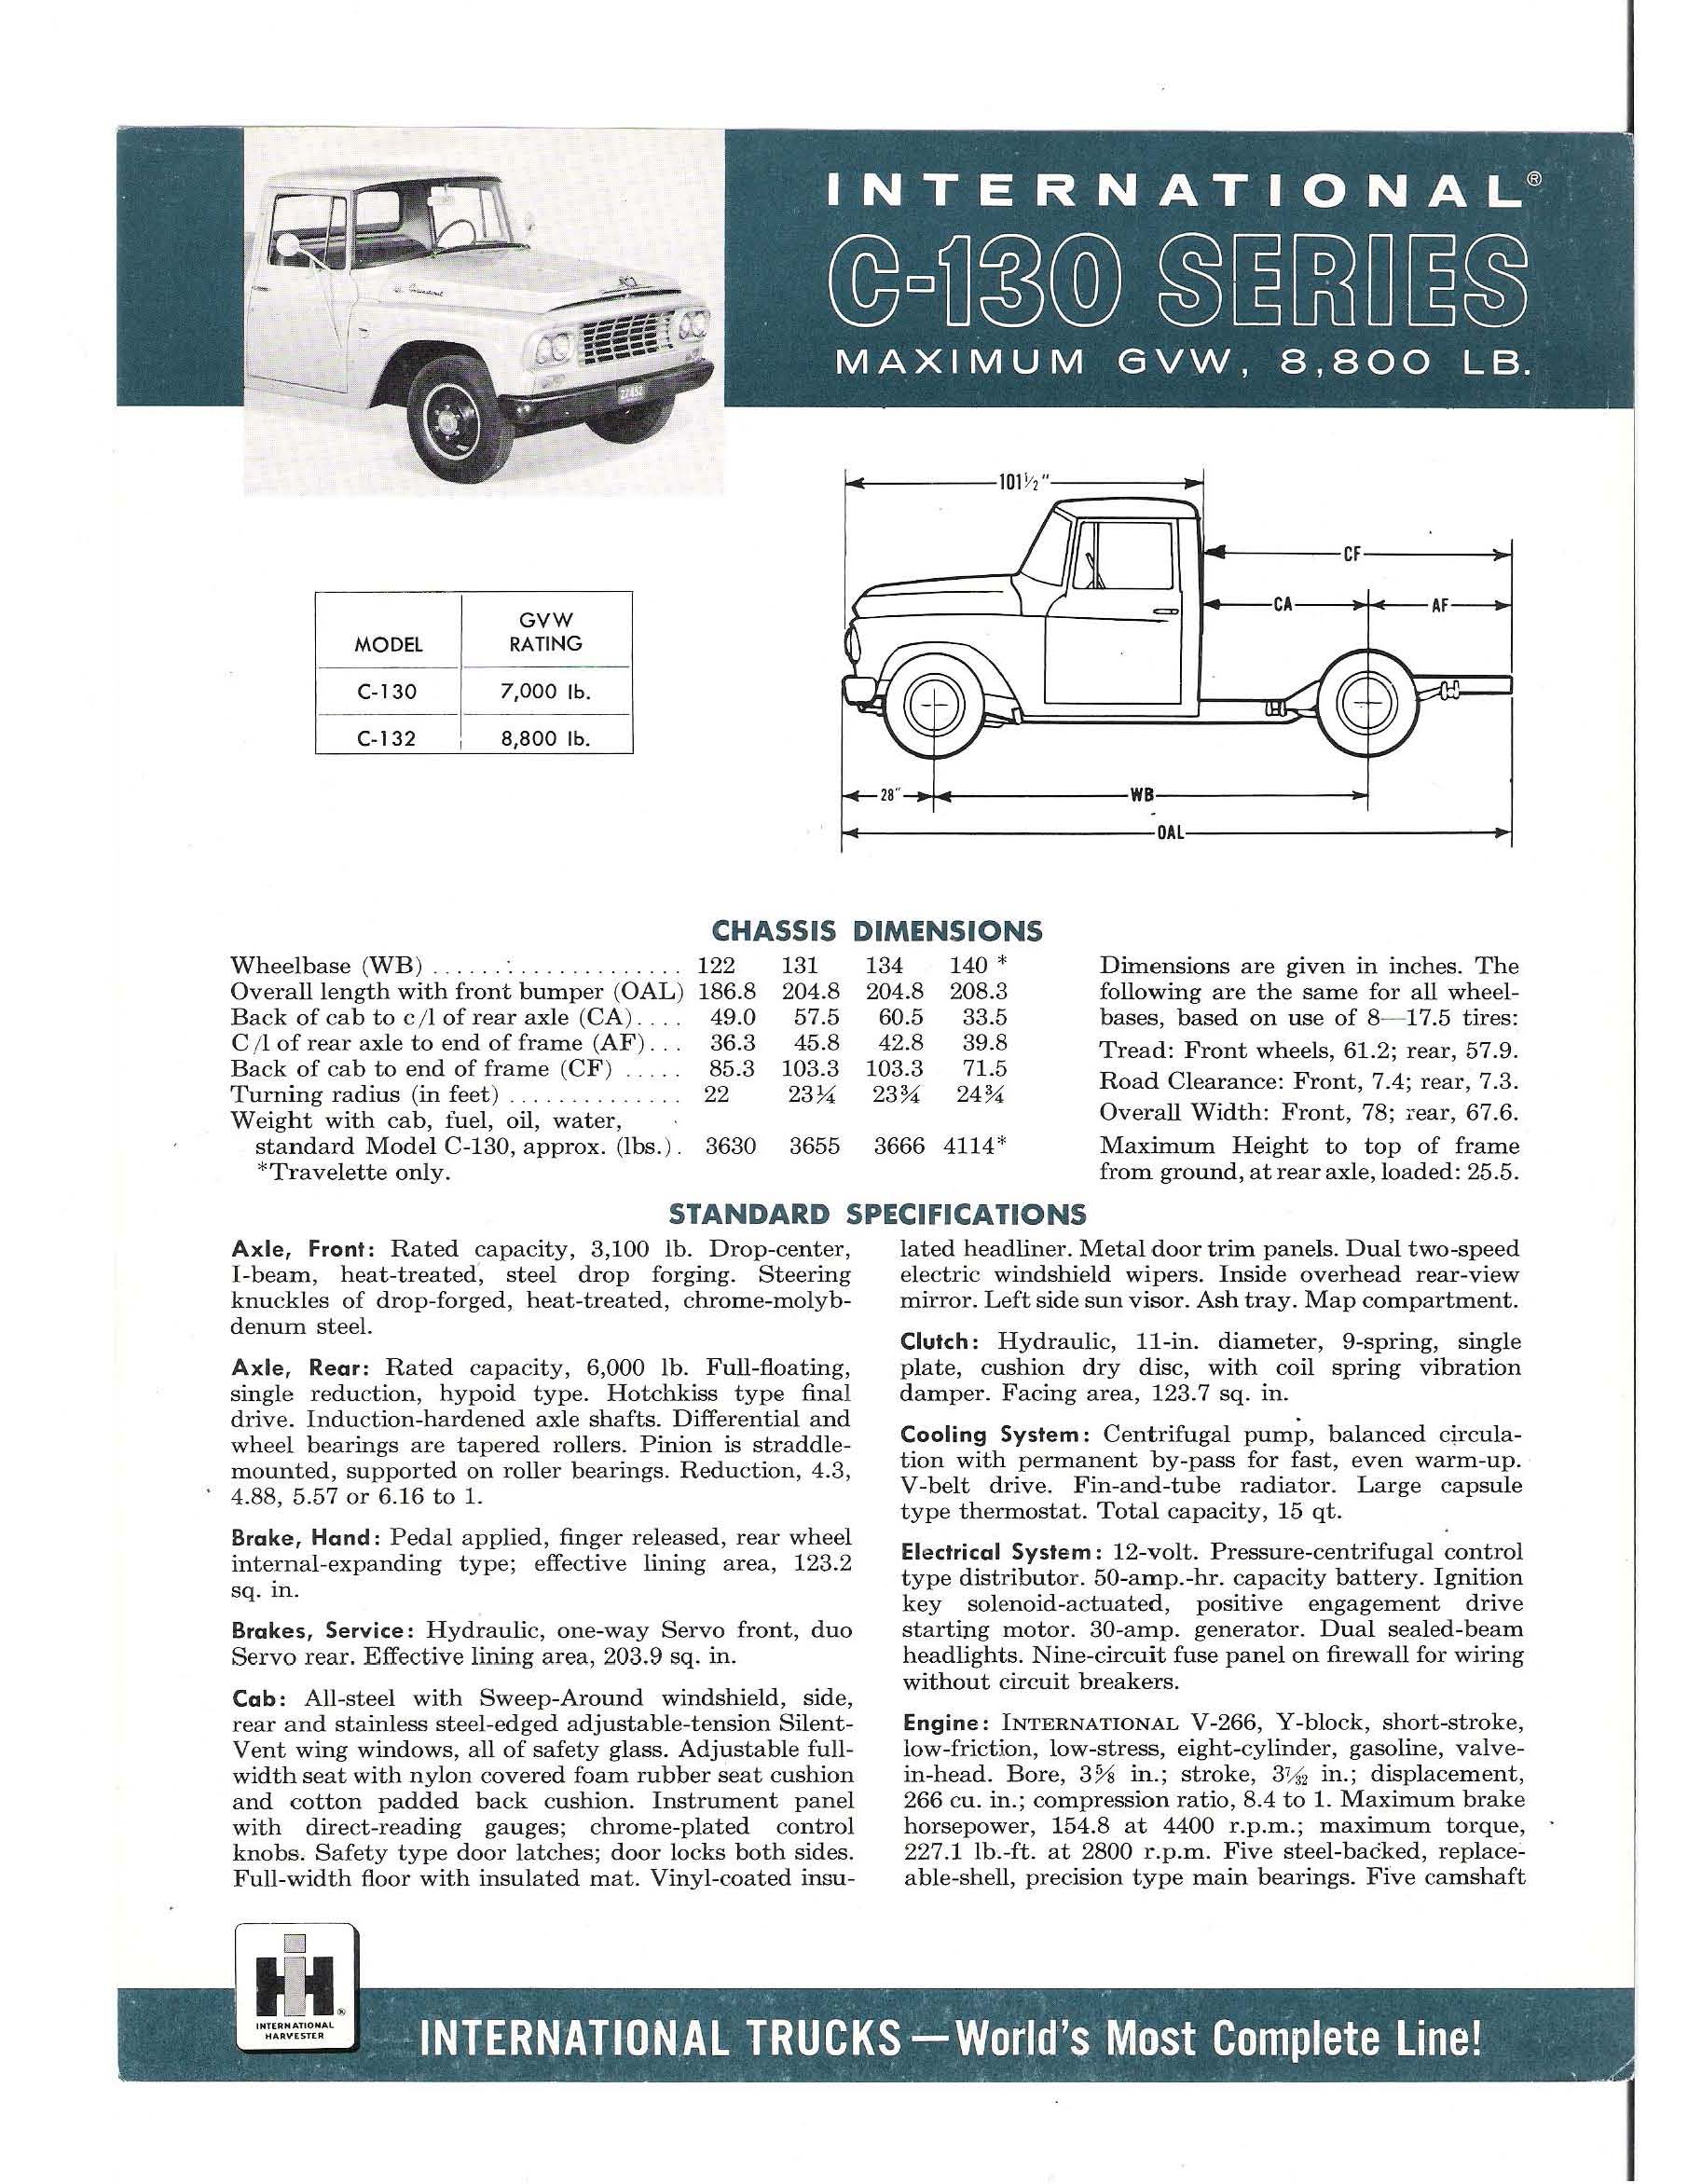 1961 International C-130 Series Folder Page 1